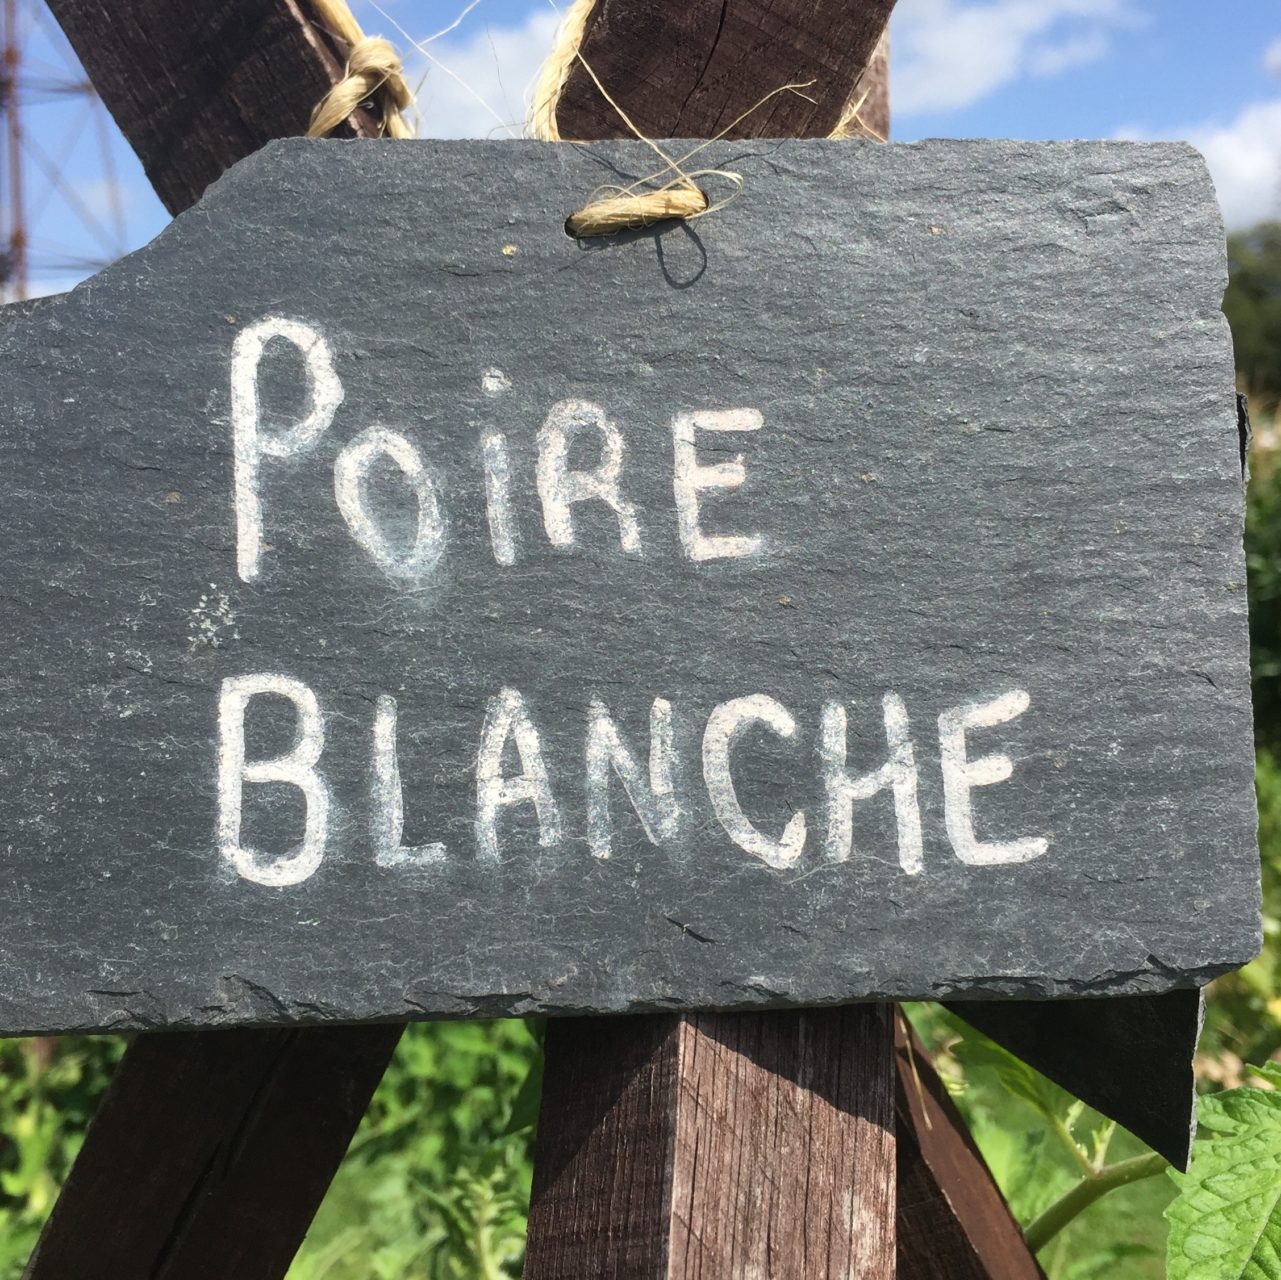 Poire blanche tomato sign in the kitchen garden at Chateau bourdaisiere